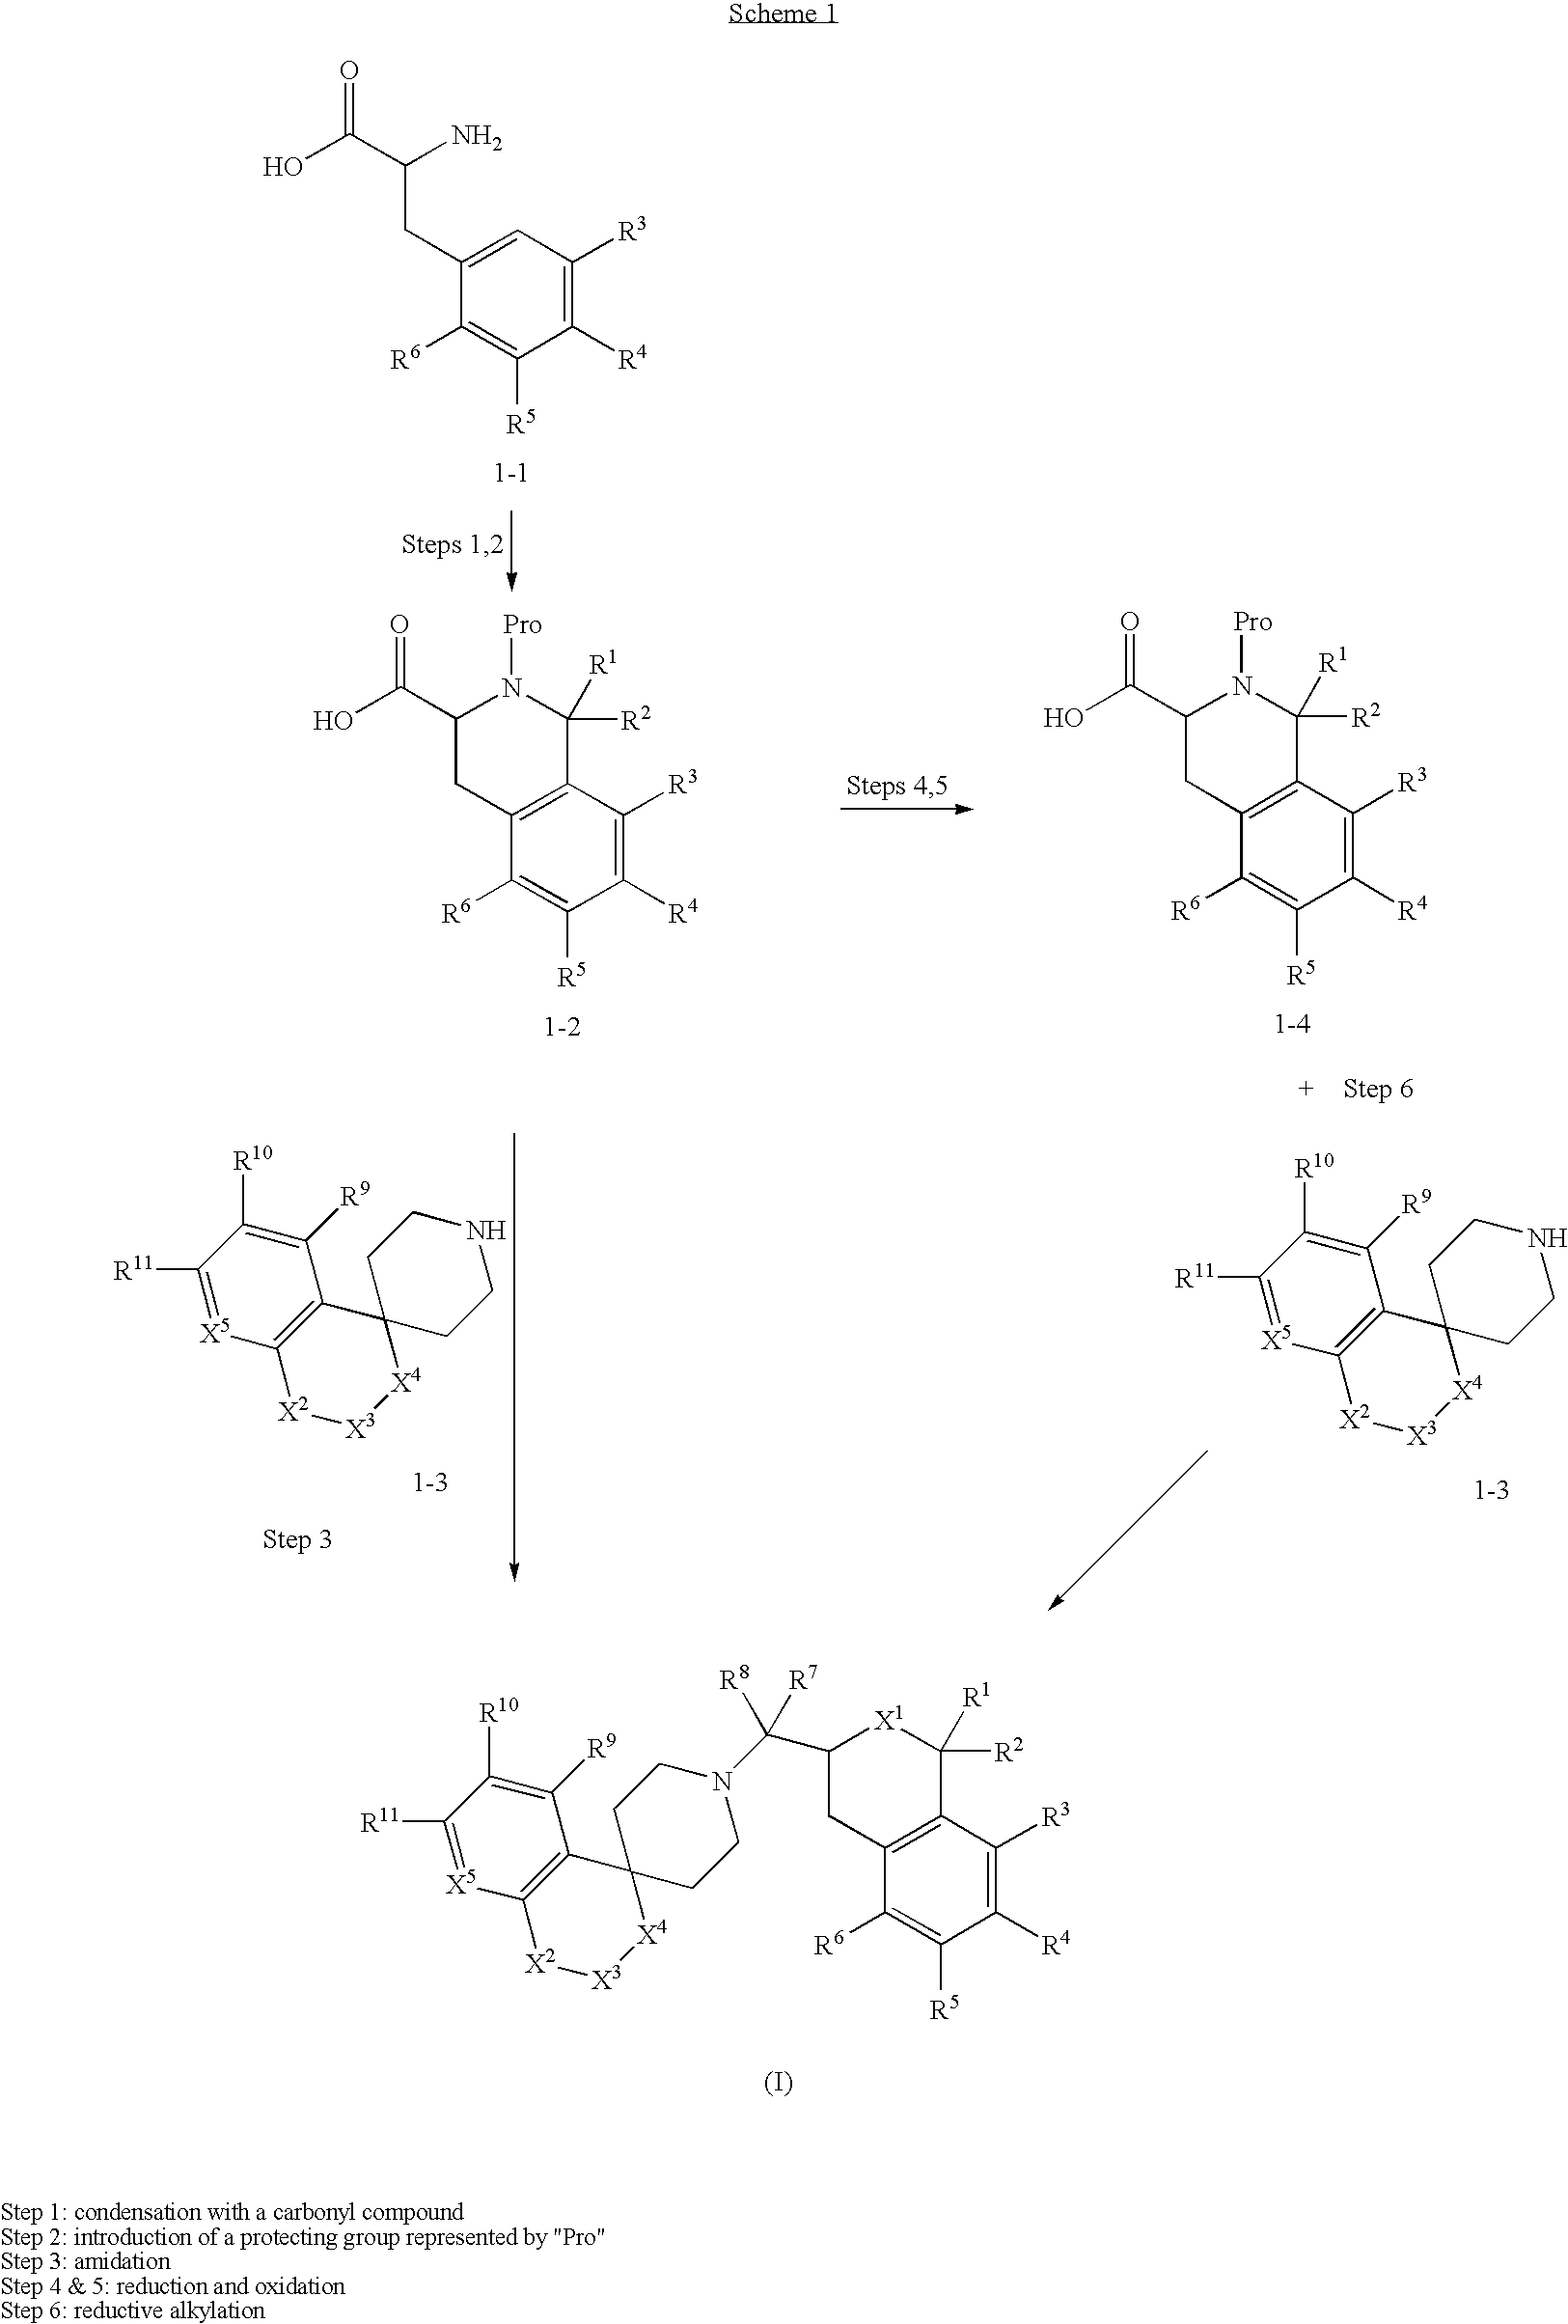 Tetrahydroisoquinoline or isochroman compounds